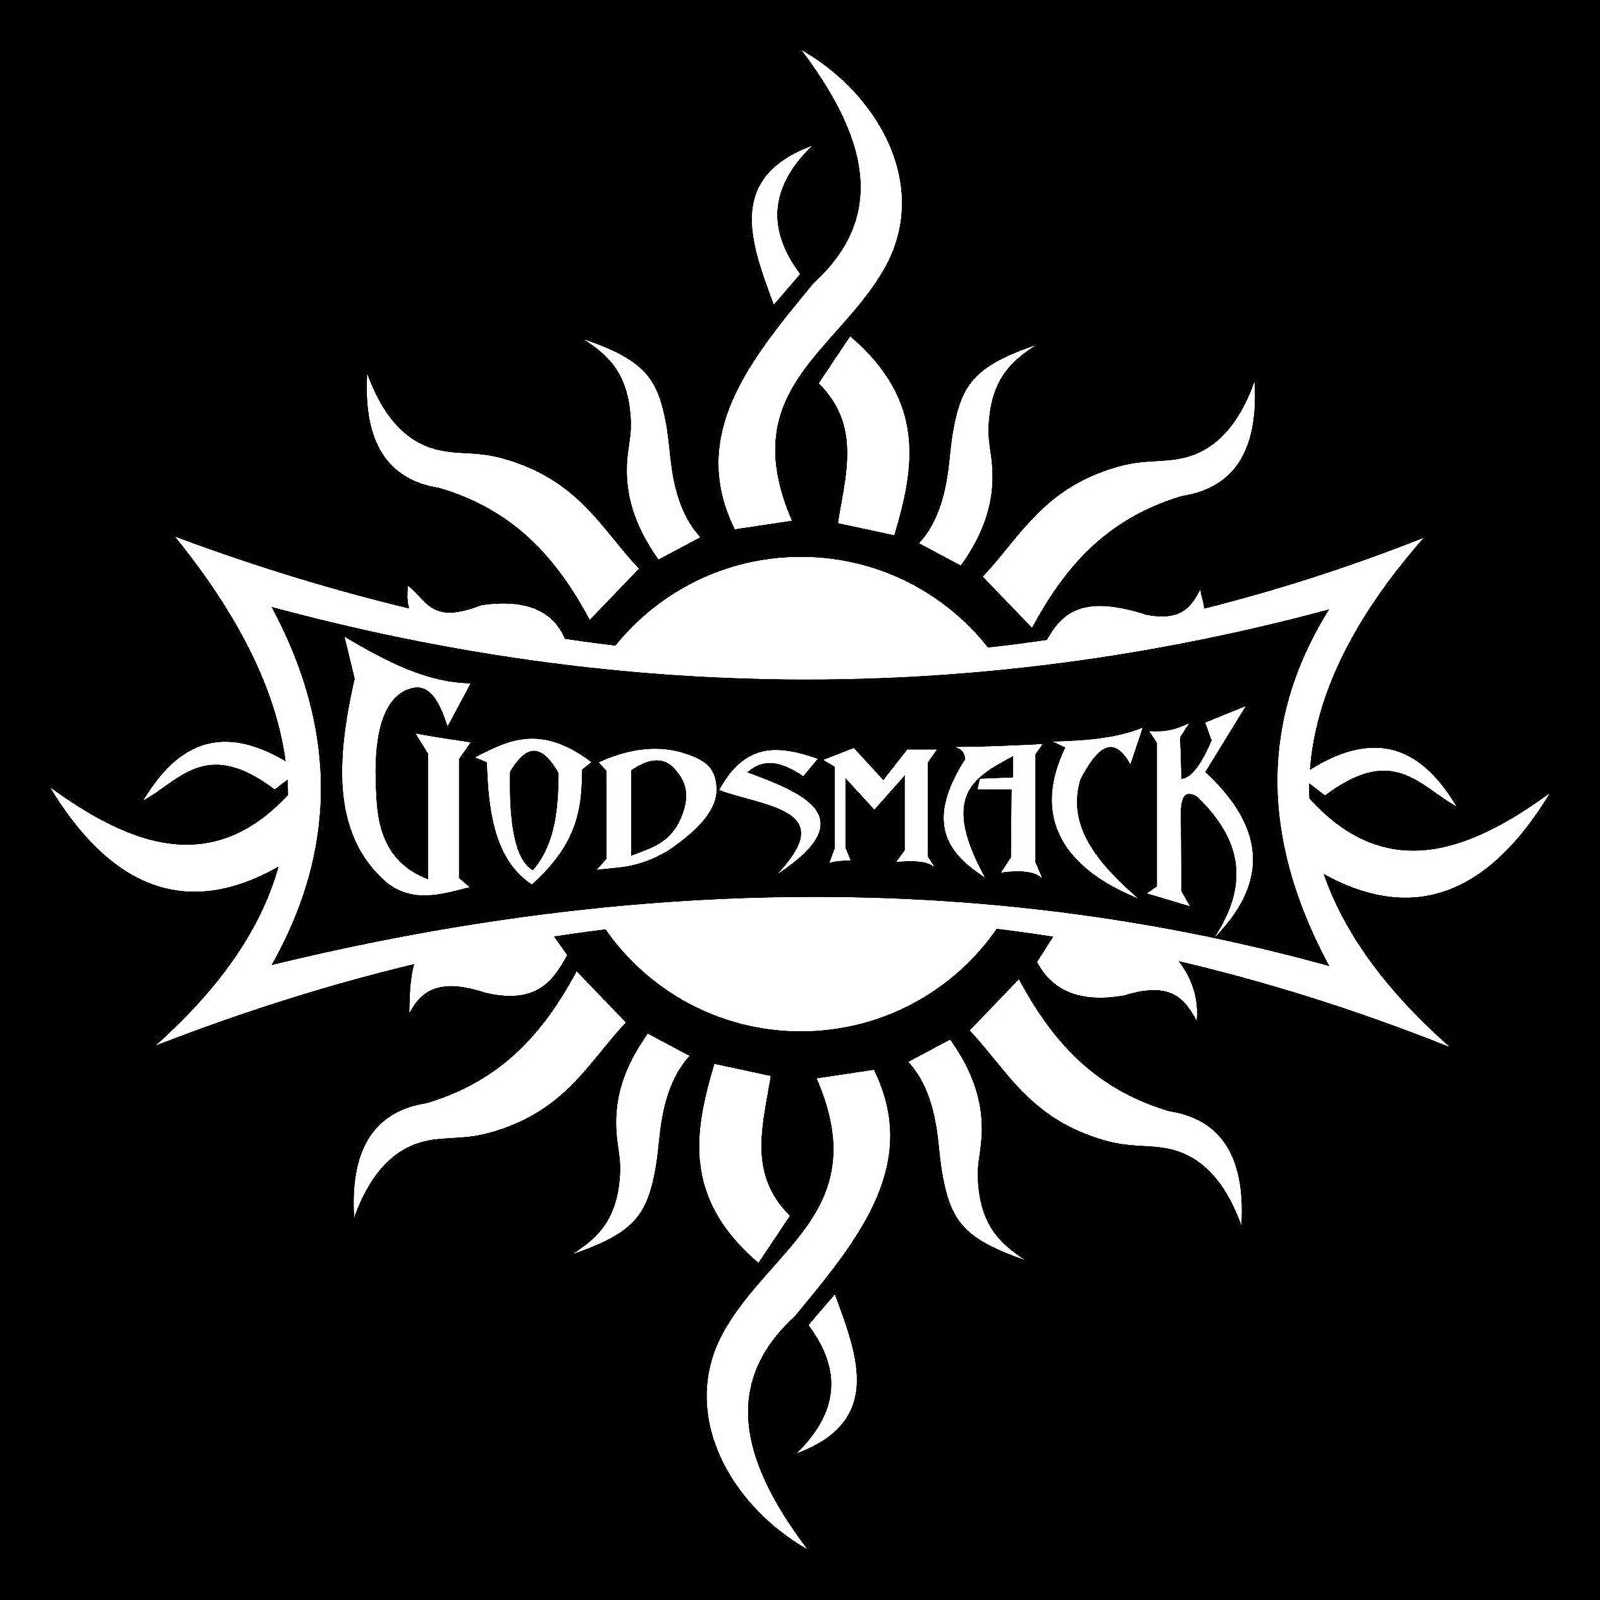 Godsmack Wallpapers 1